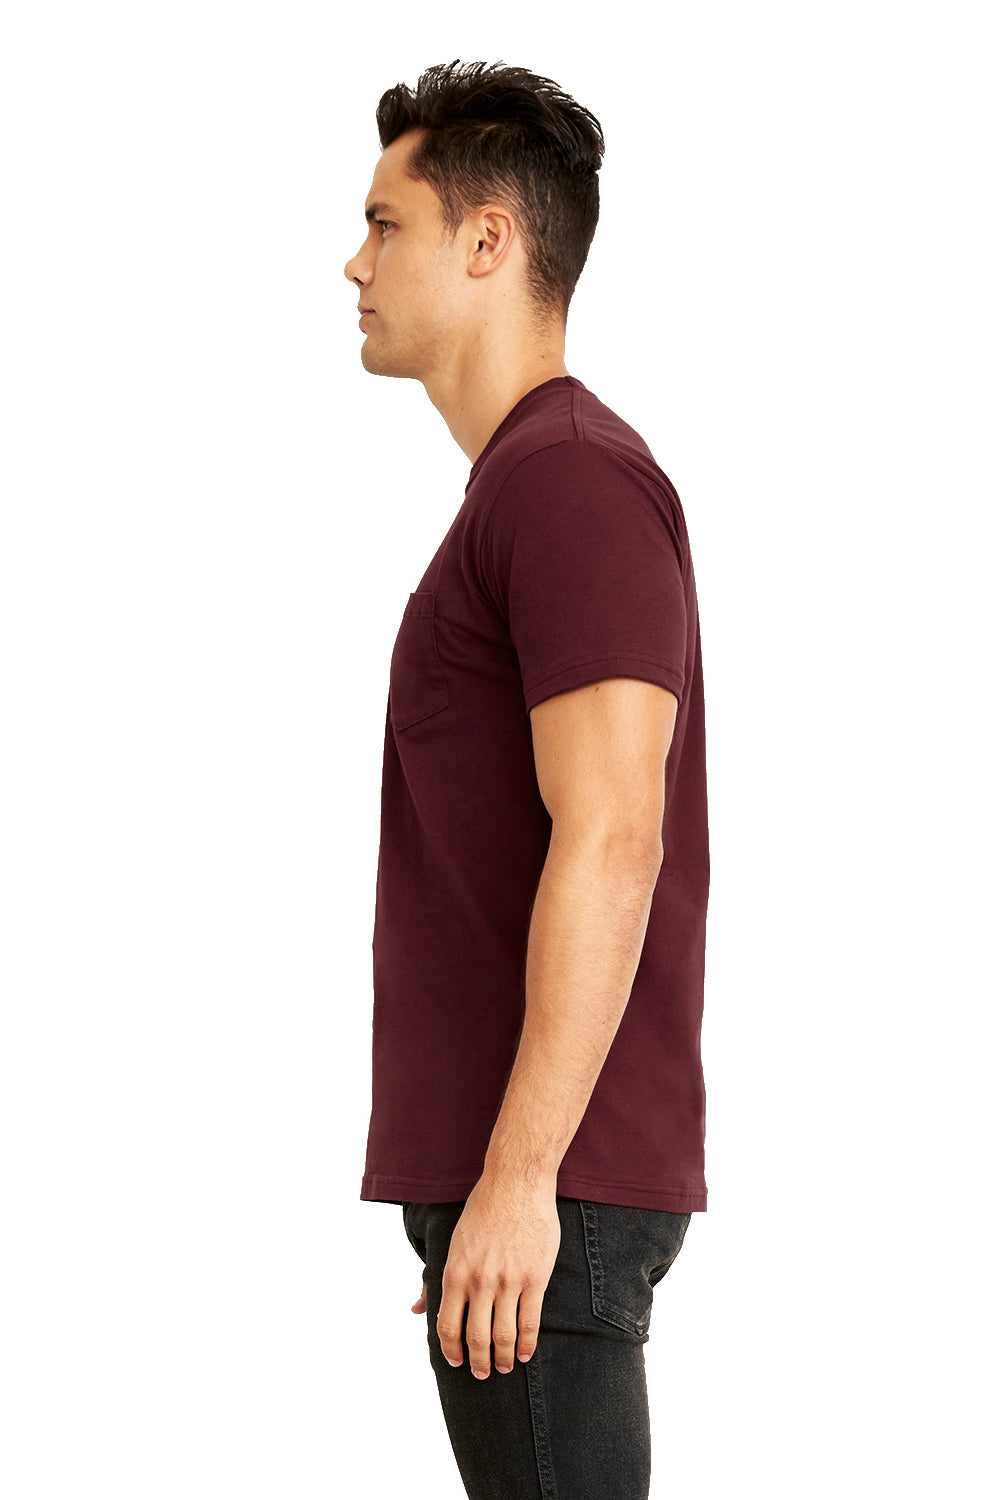 Next Level 3605 Mens Fine Jersey Short Sleeve Crewneck T-Shirt w/ Pocket Maroon Side